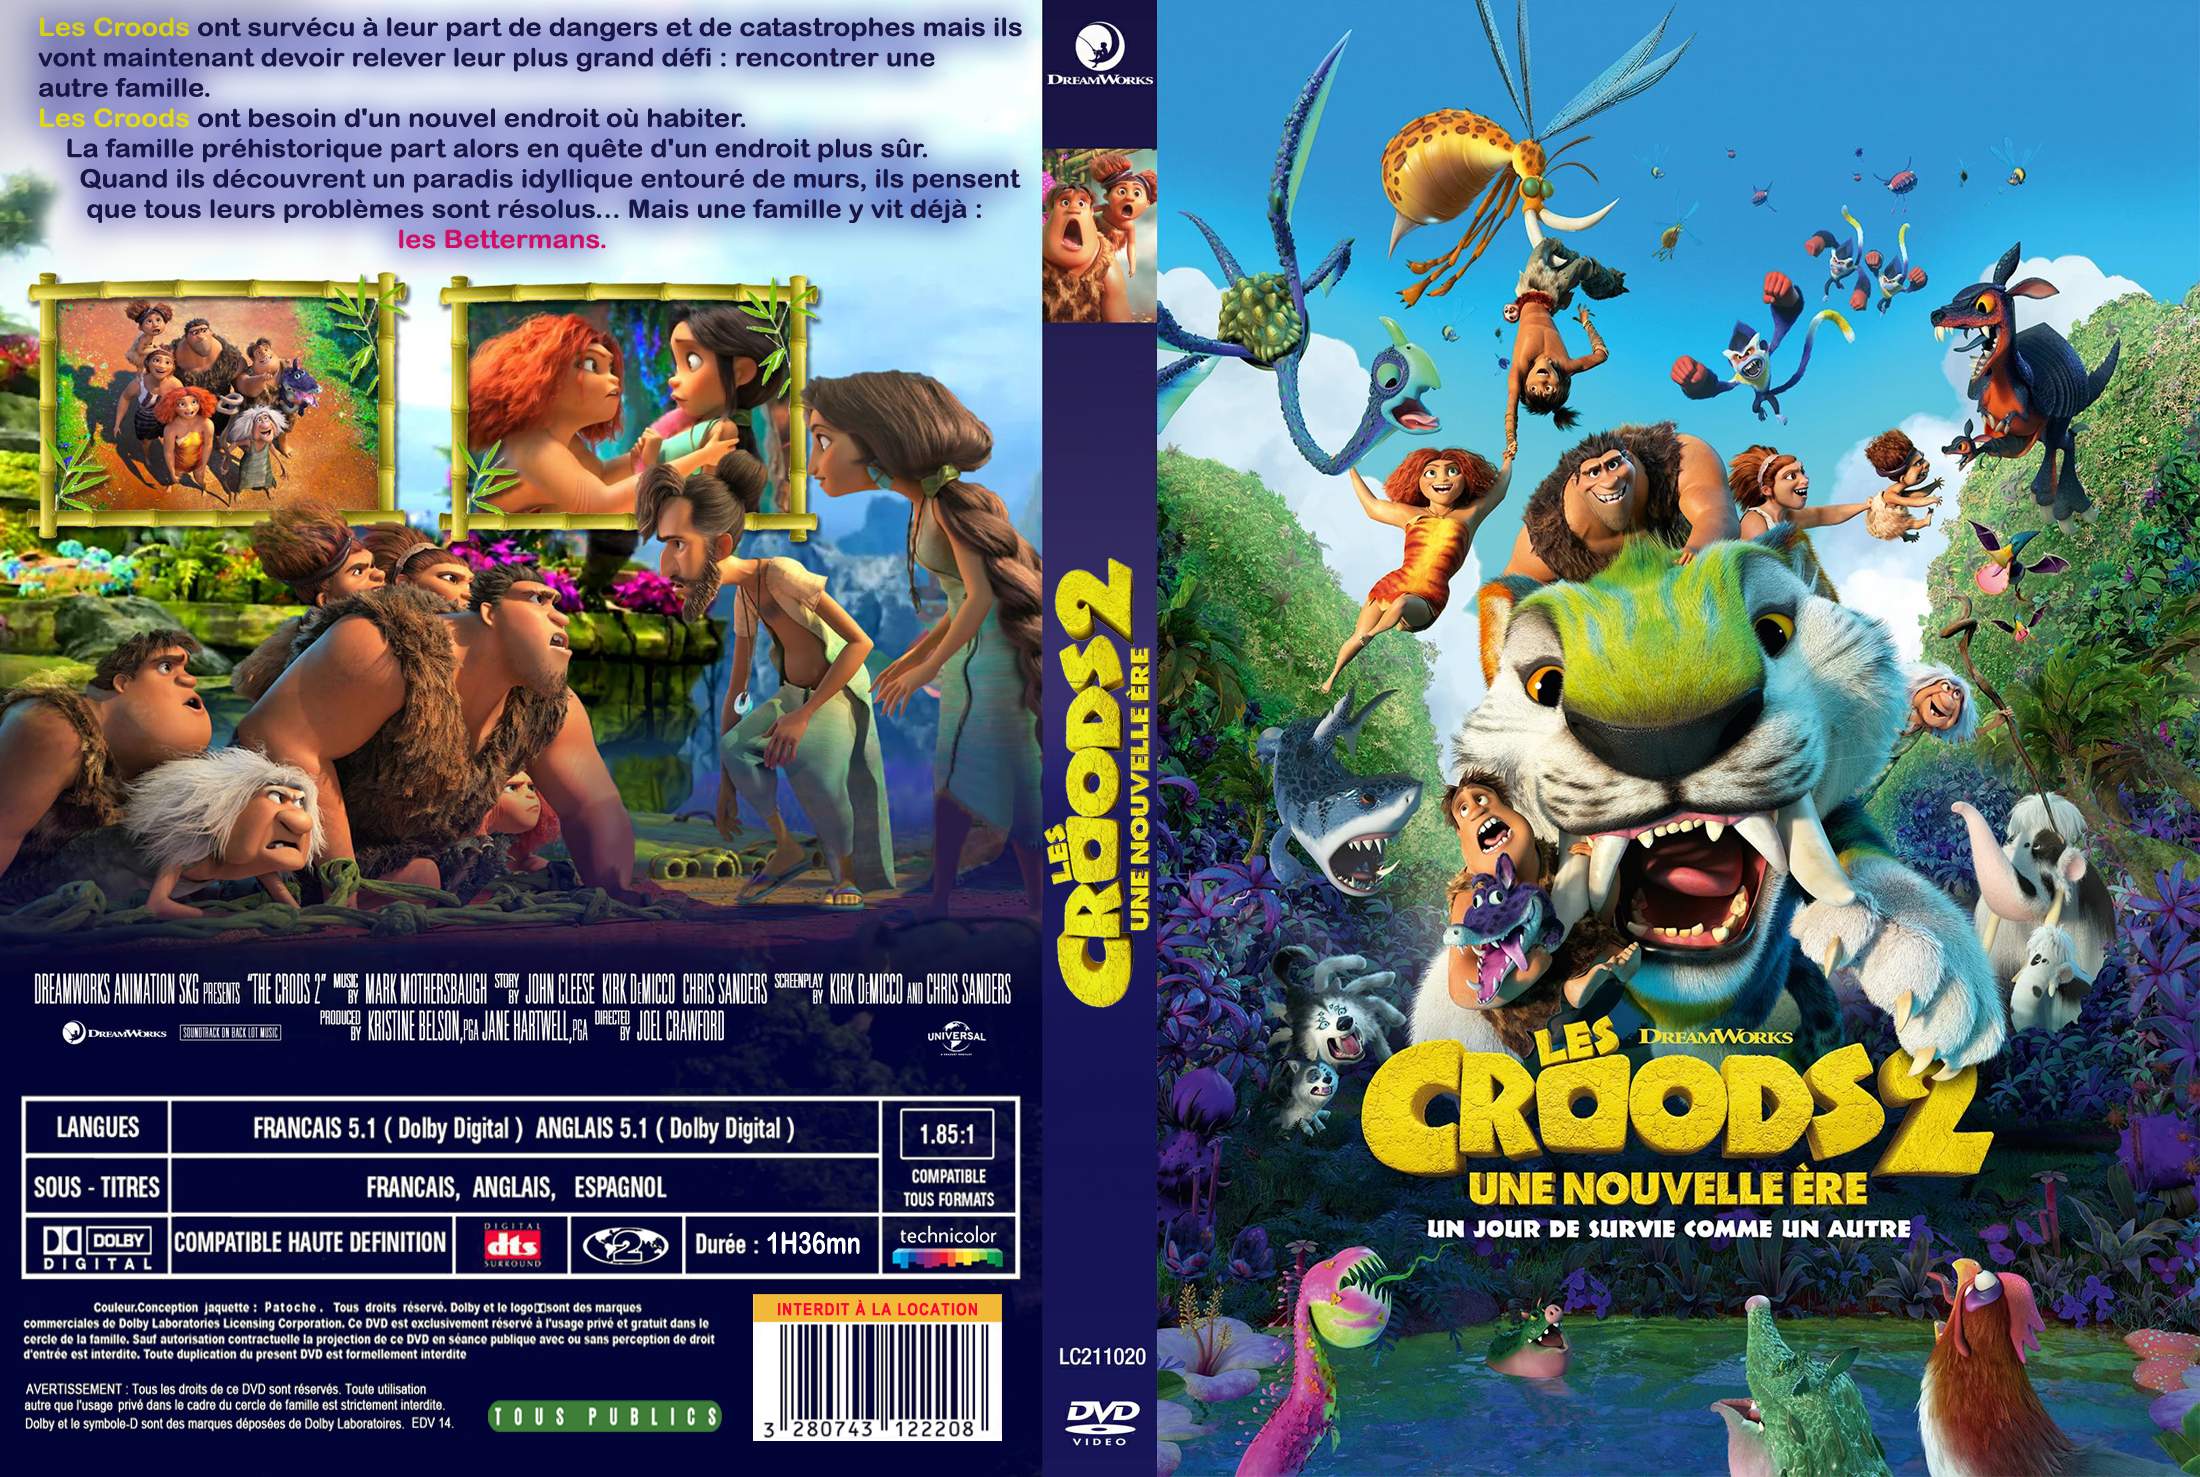 Jaquette DVD Les Croods 2 custom